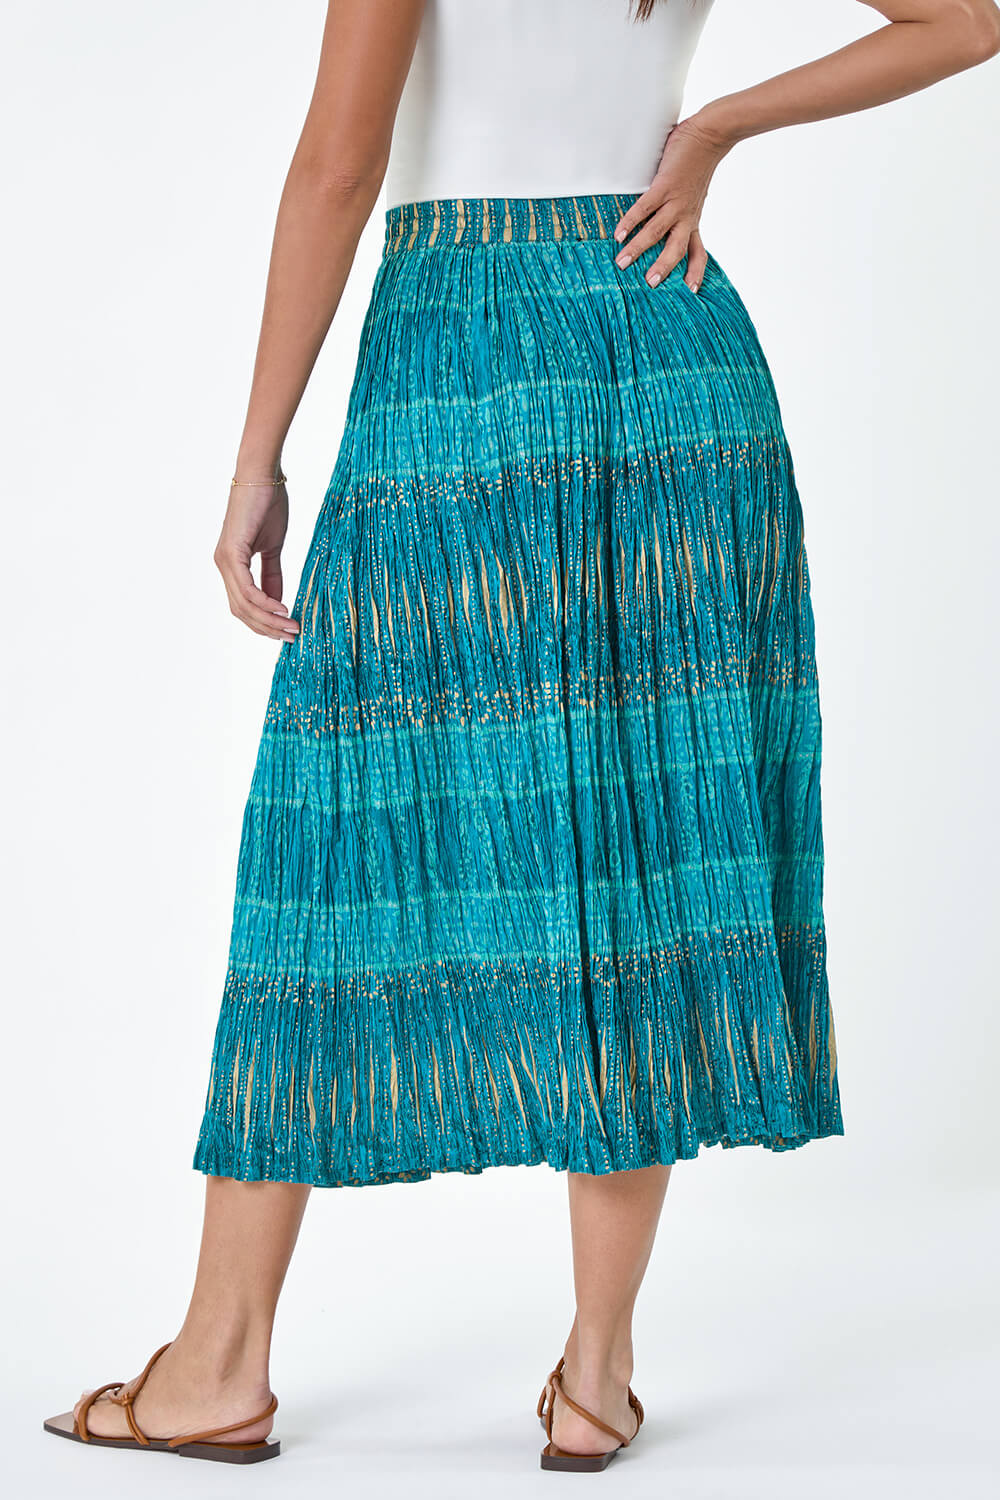 Aqua Crinkle Cotton Metallic Foil Midi Skirt, Image 3 of 5